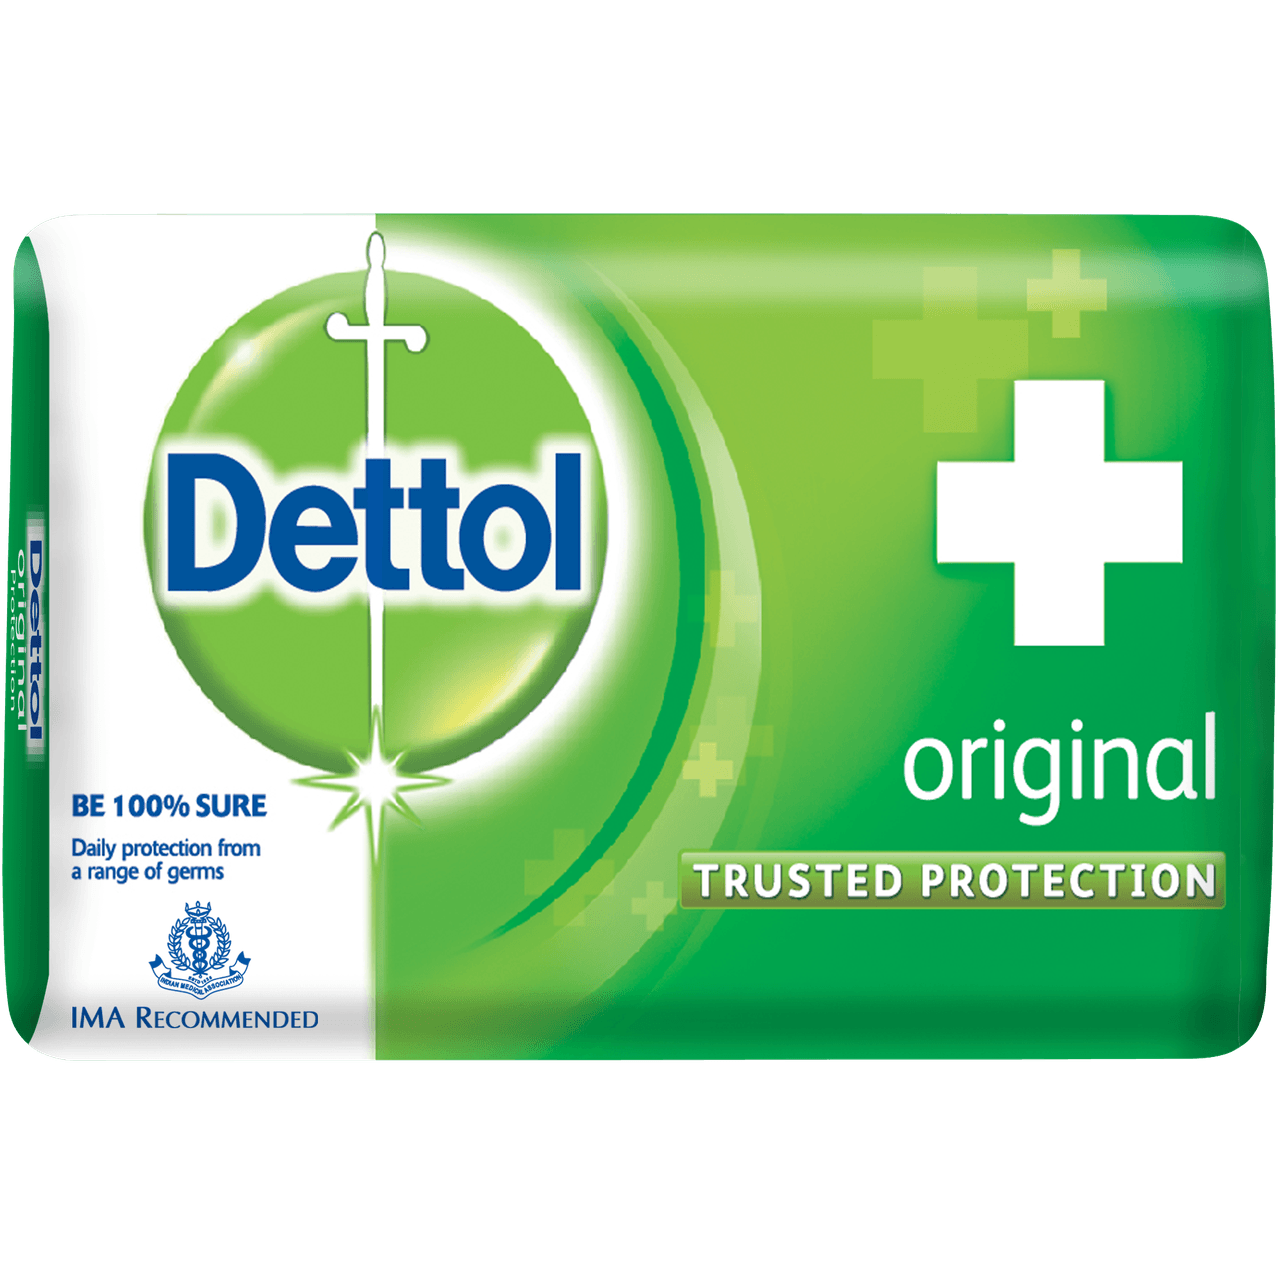 Dettol Logo - Antibacterial Body Soap | Dettol